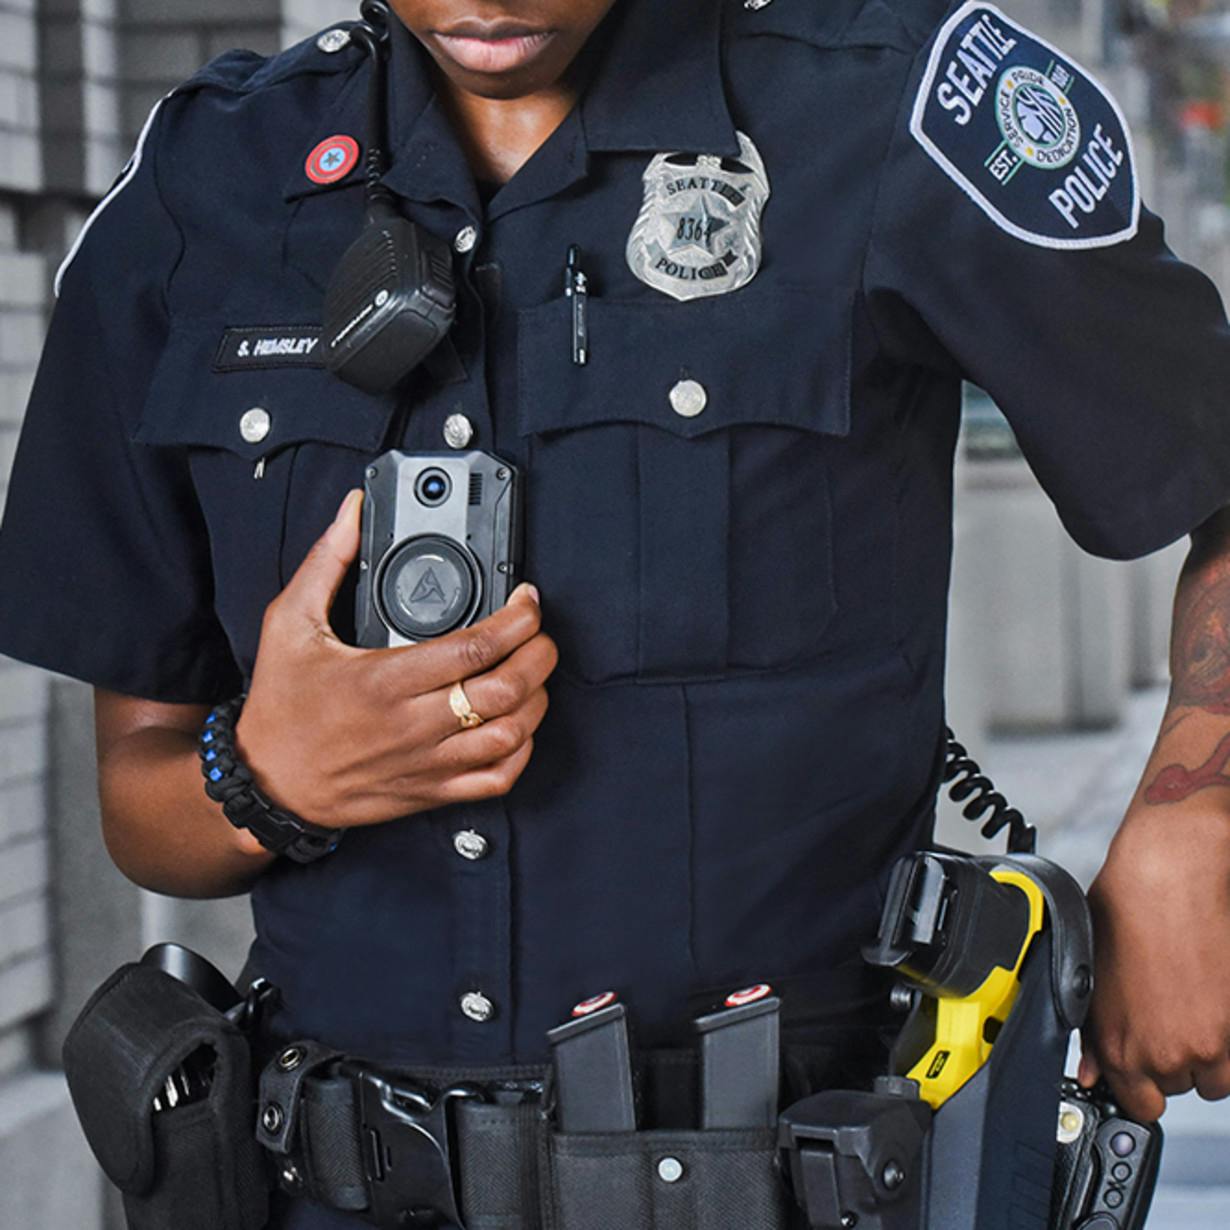 Axon Body 3 Axon - met police officer shirt roblox